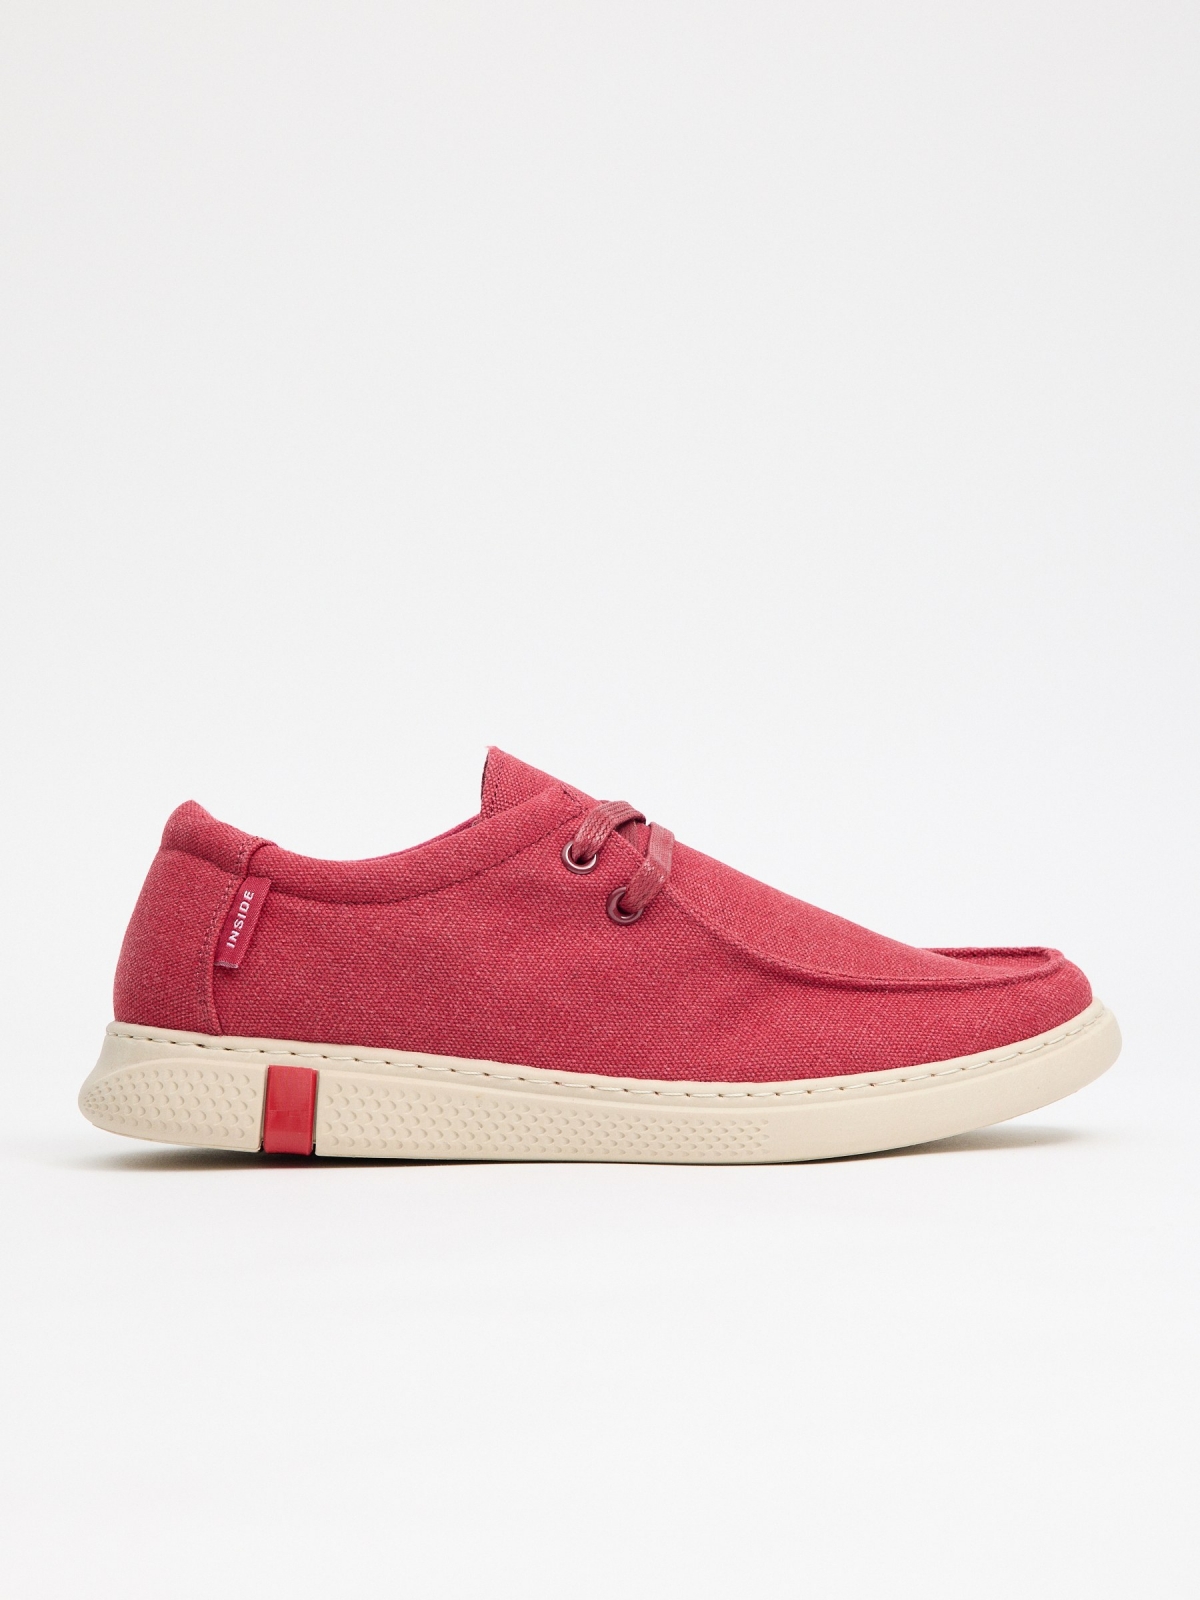 Red wallabee shoe